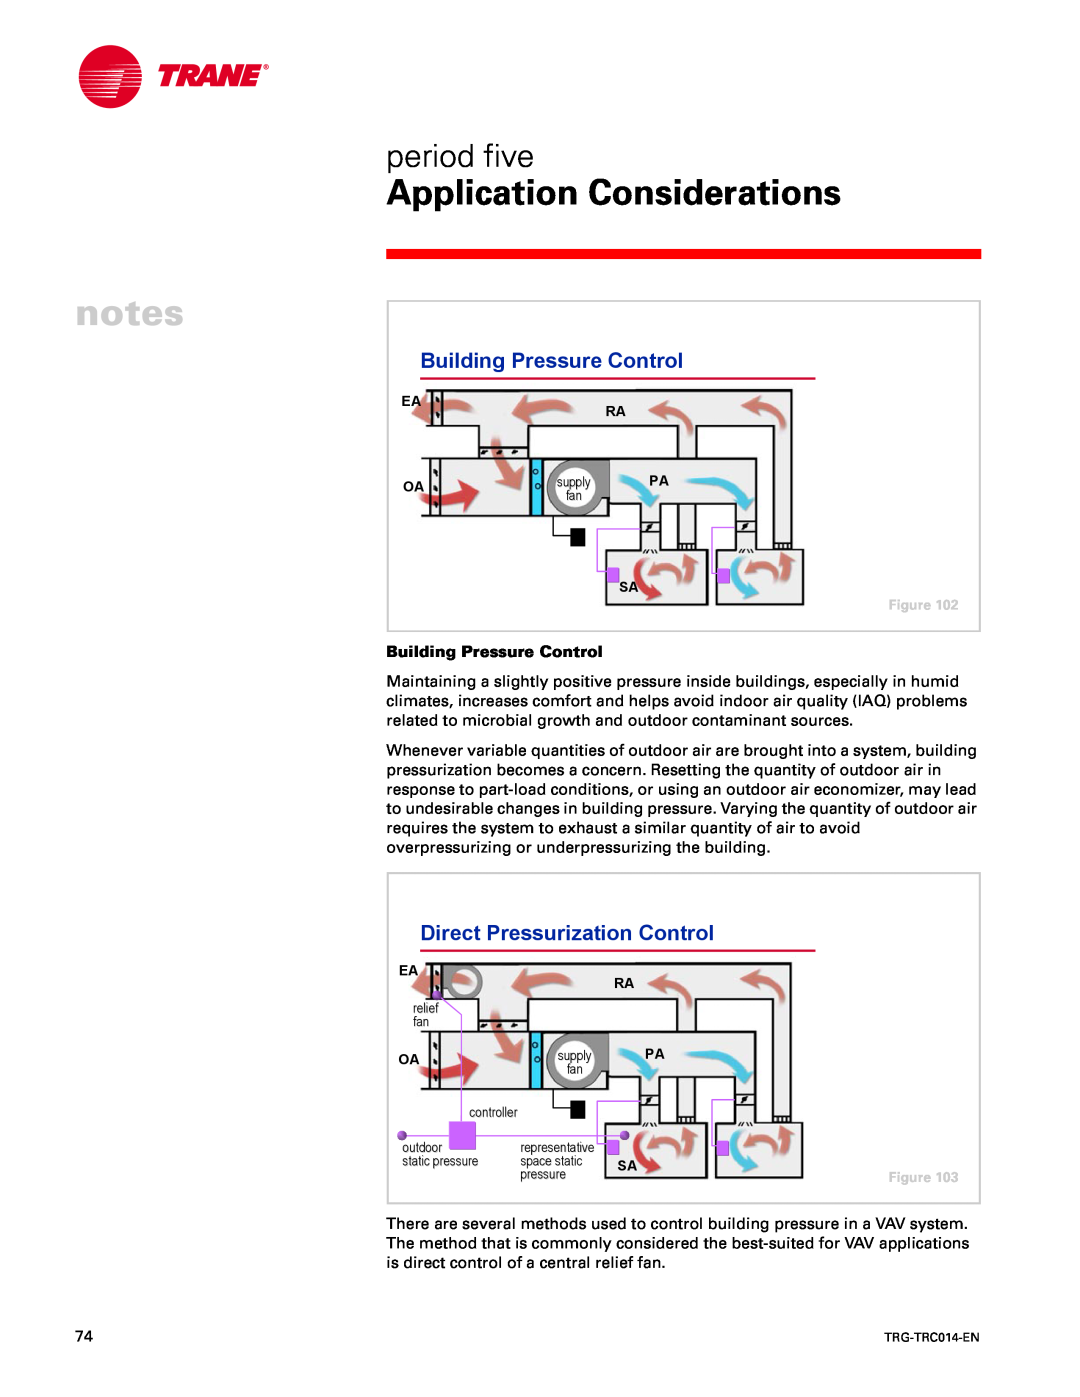 Trane TRG-TRC014-EN Building Pressure Control, Direct Pressurization Control, Application Considerations, period five 